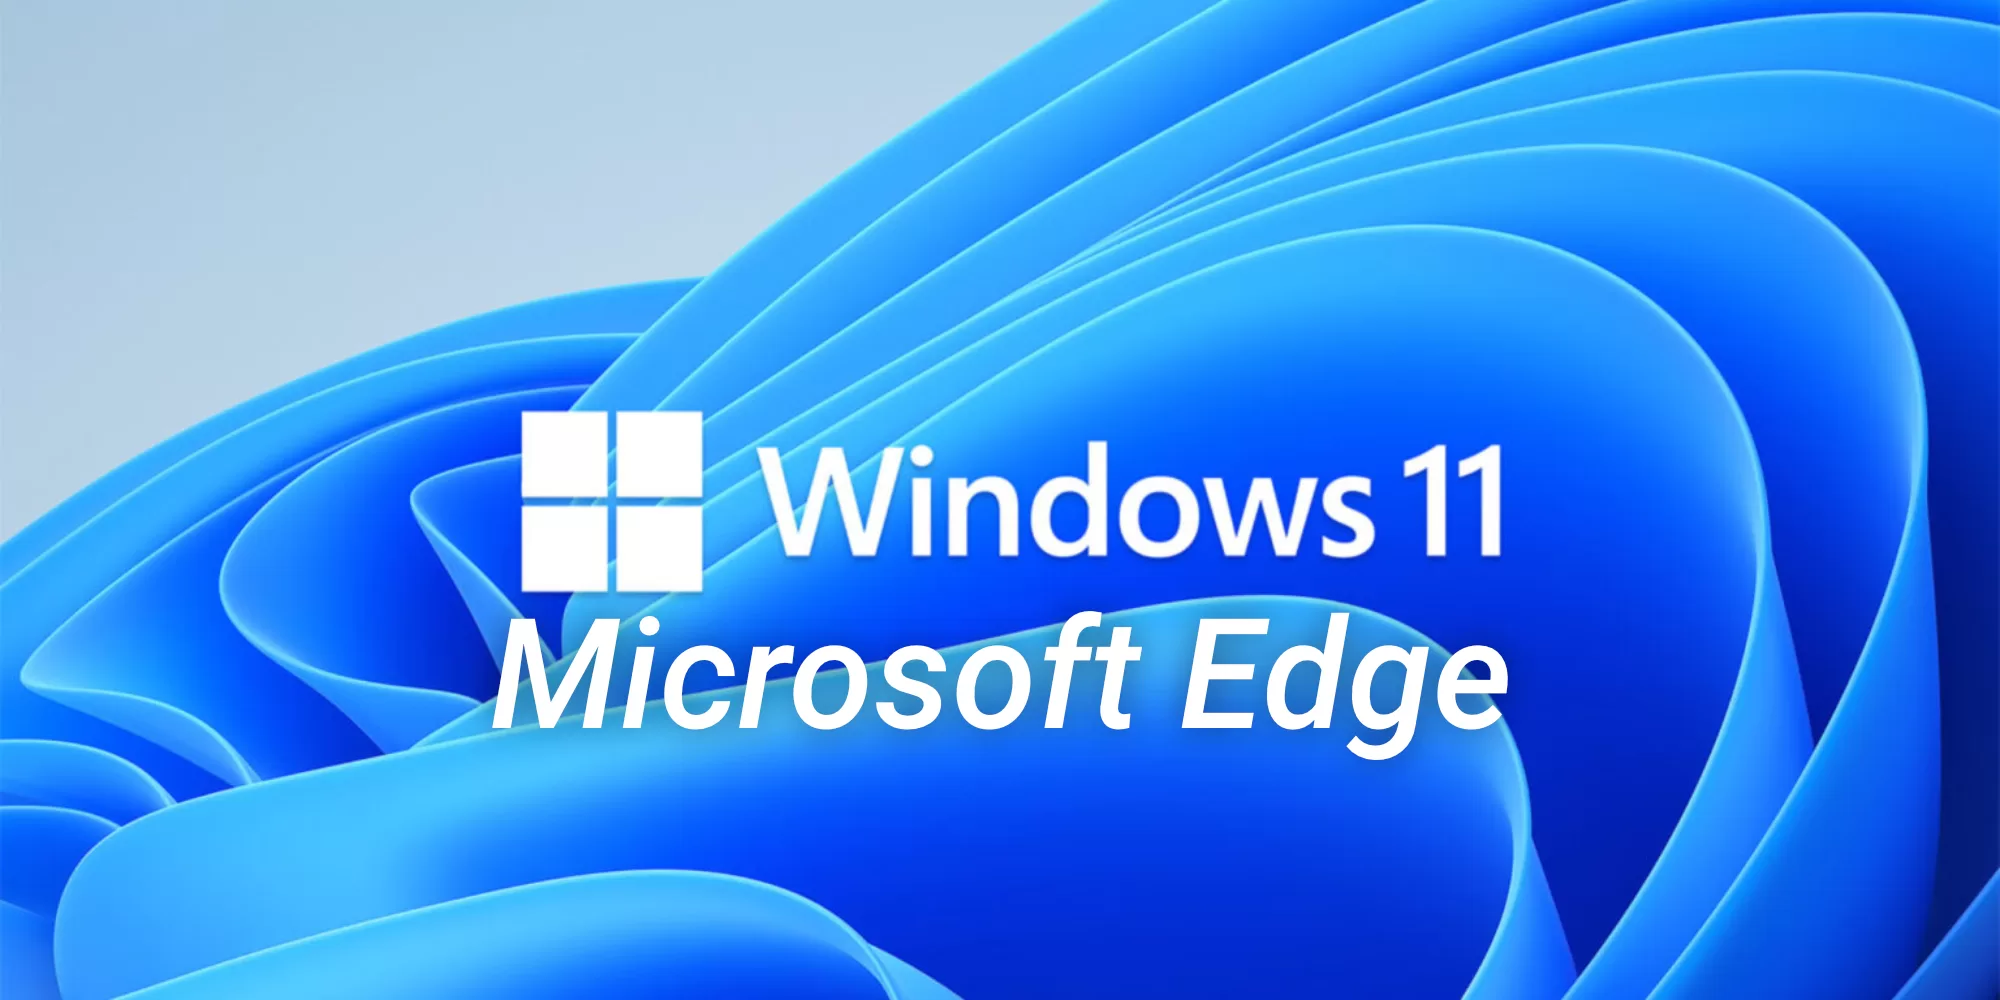 How to make Microsoft Edge look like Windows 11